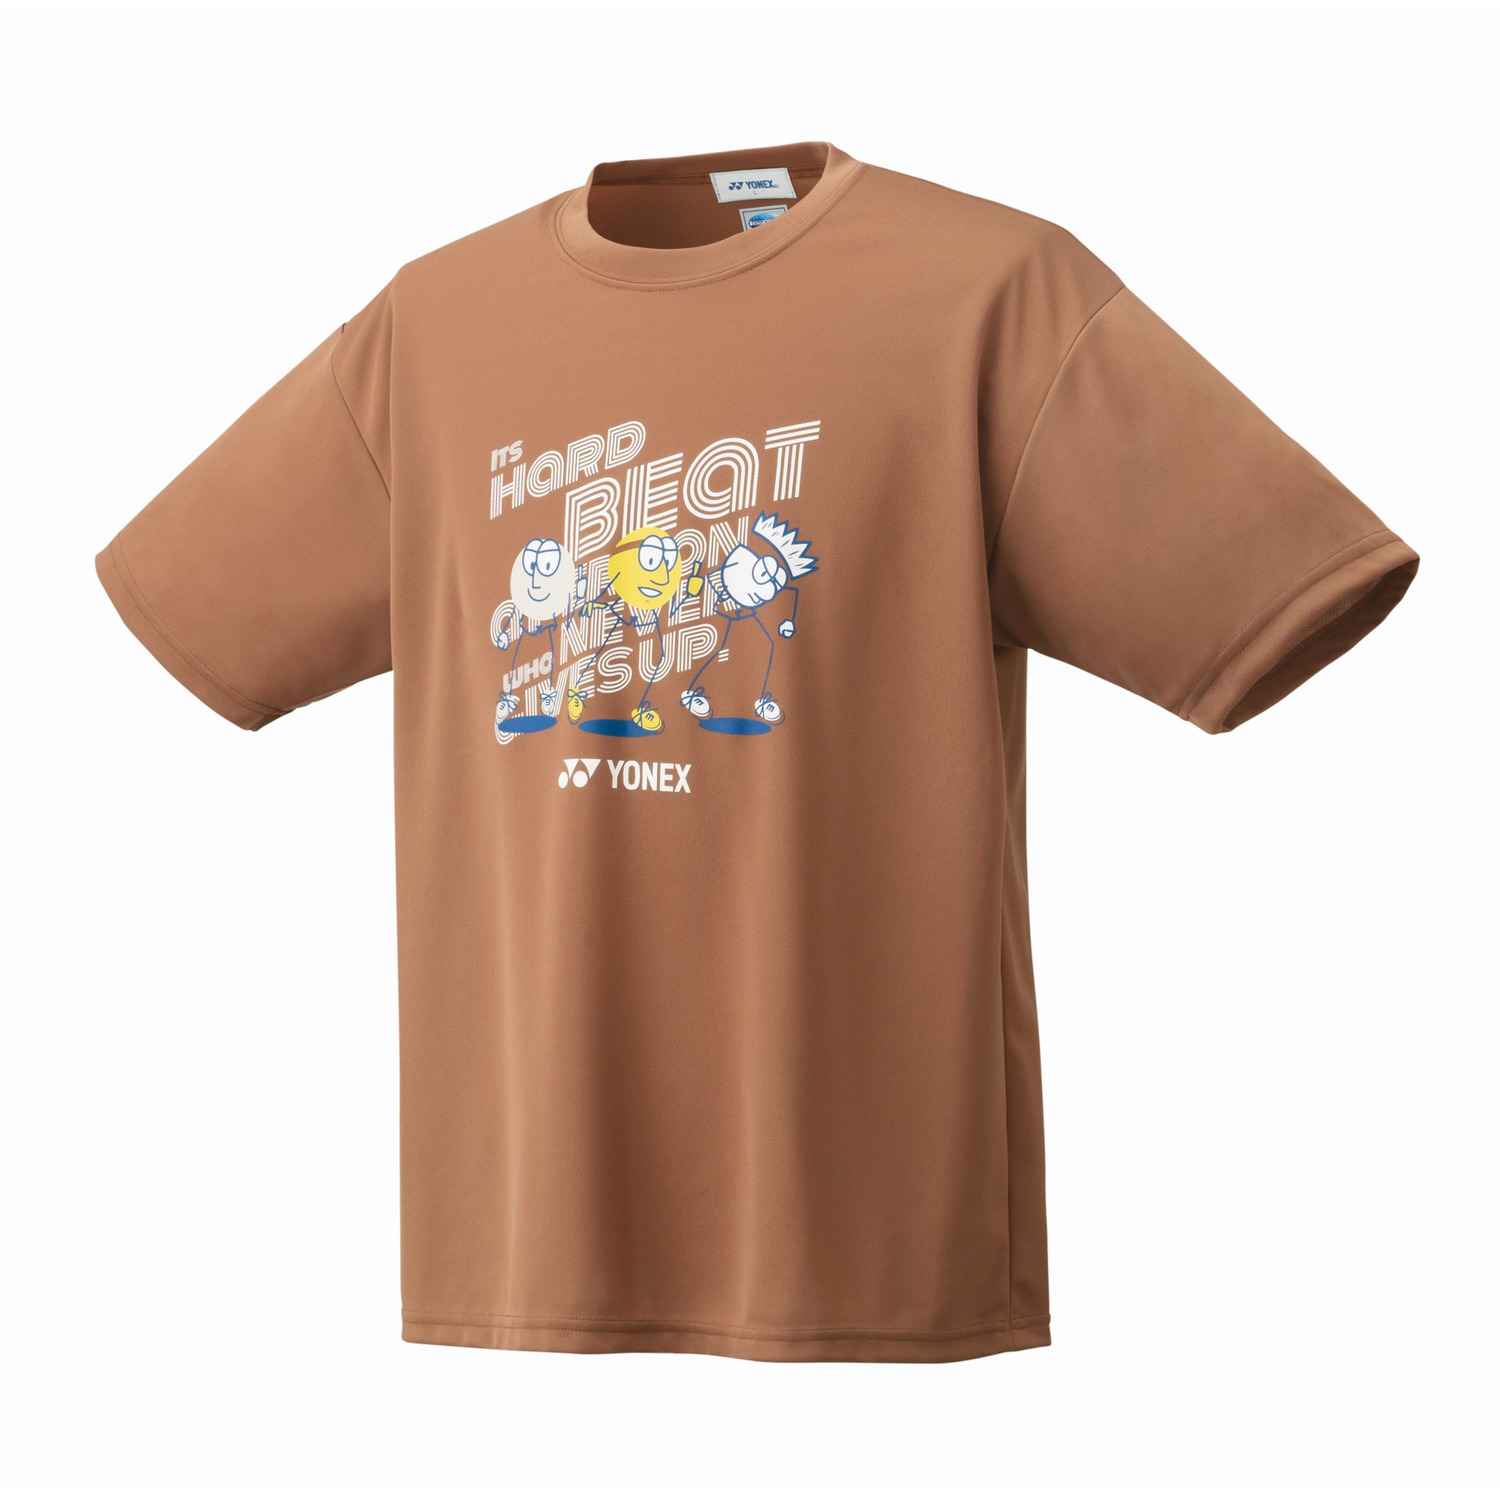 Yonex Badminton/ Tennis Sports Shirt 16726Y Brick (Made in Japan) MEN'S